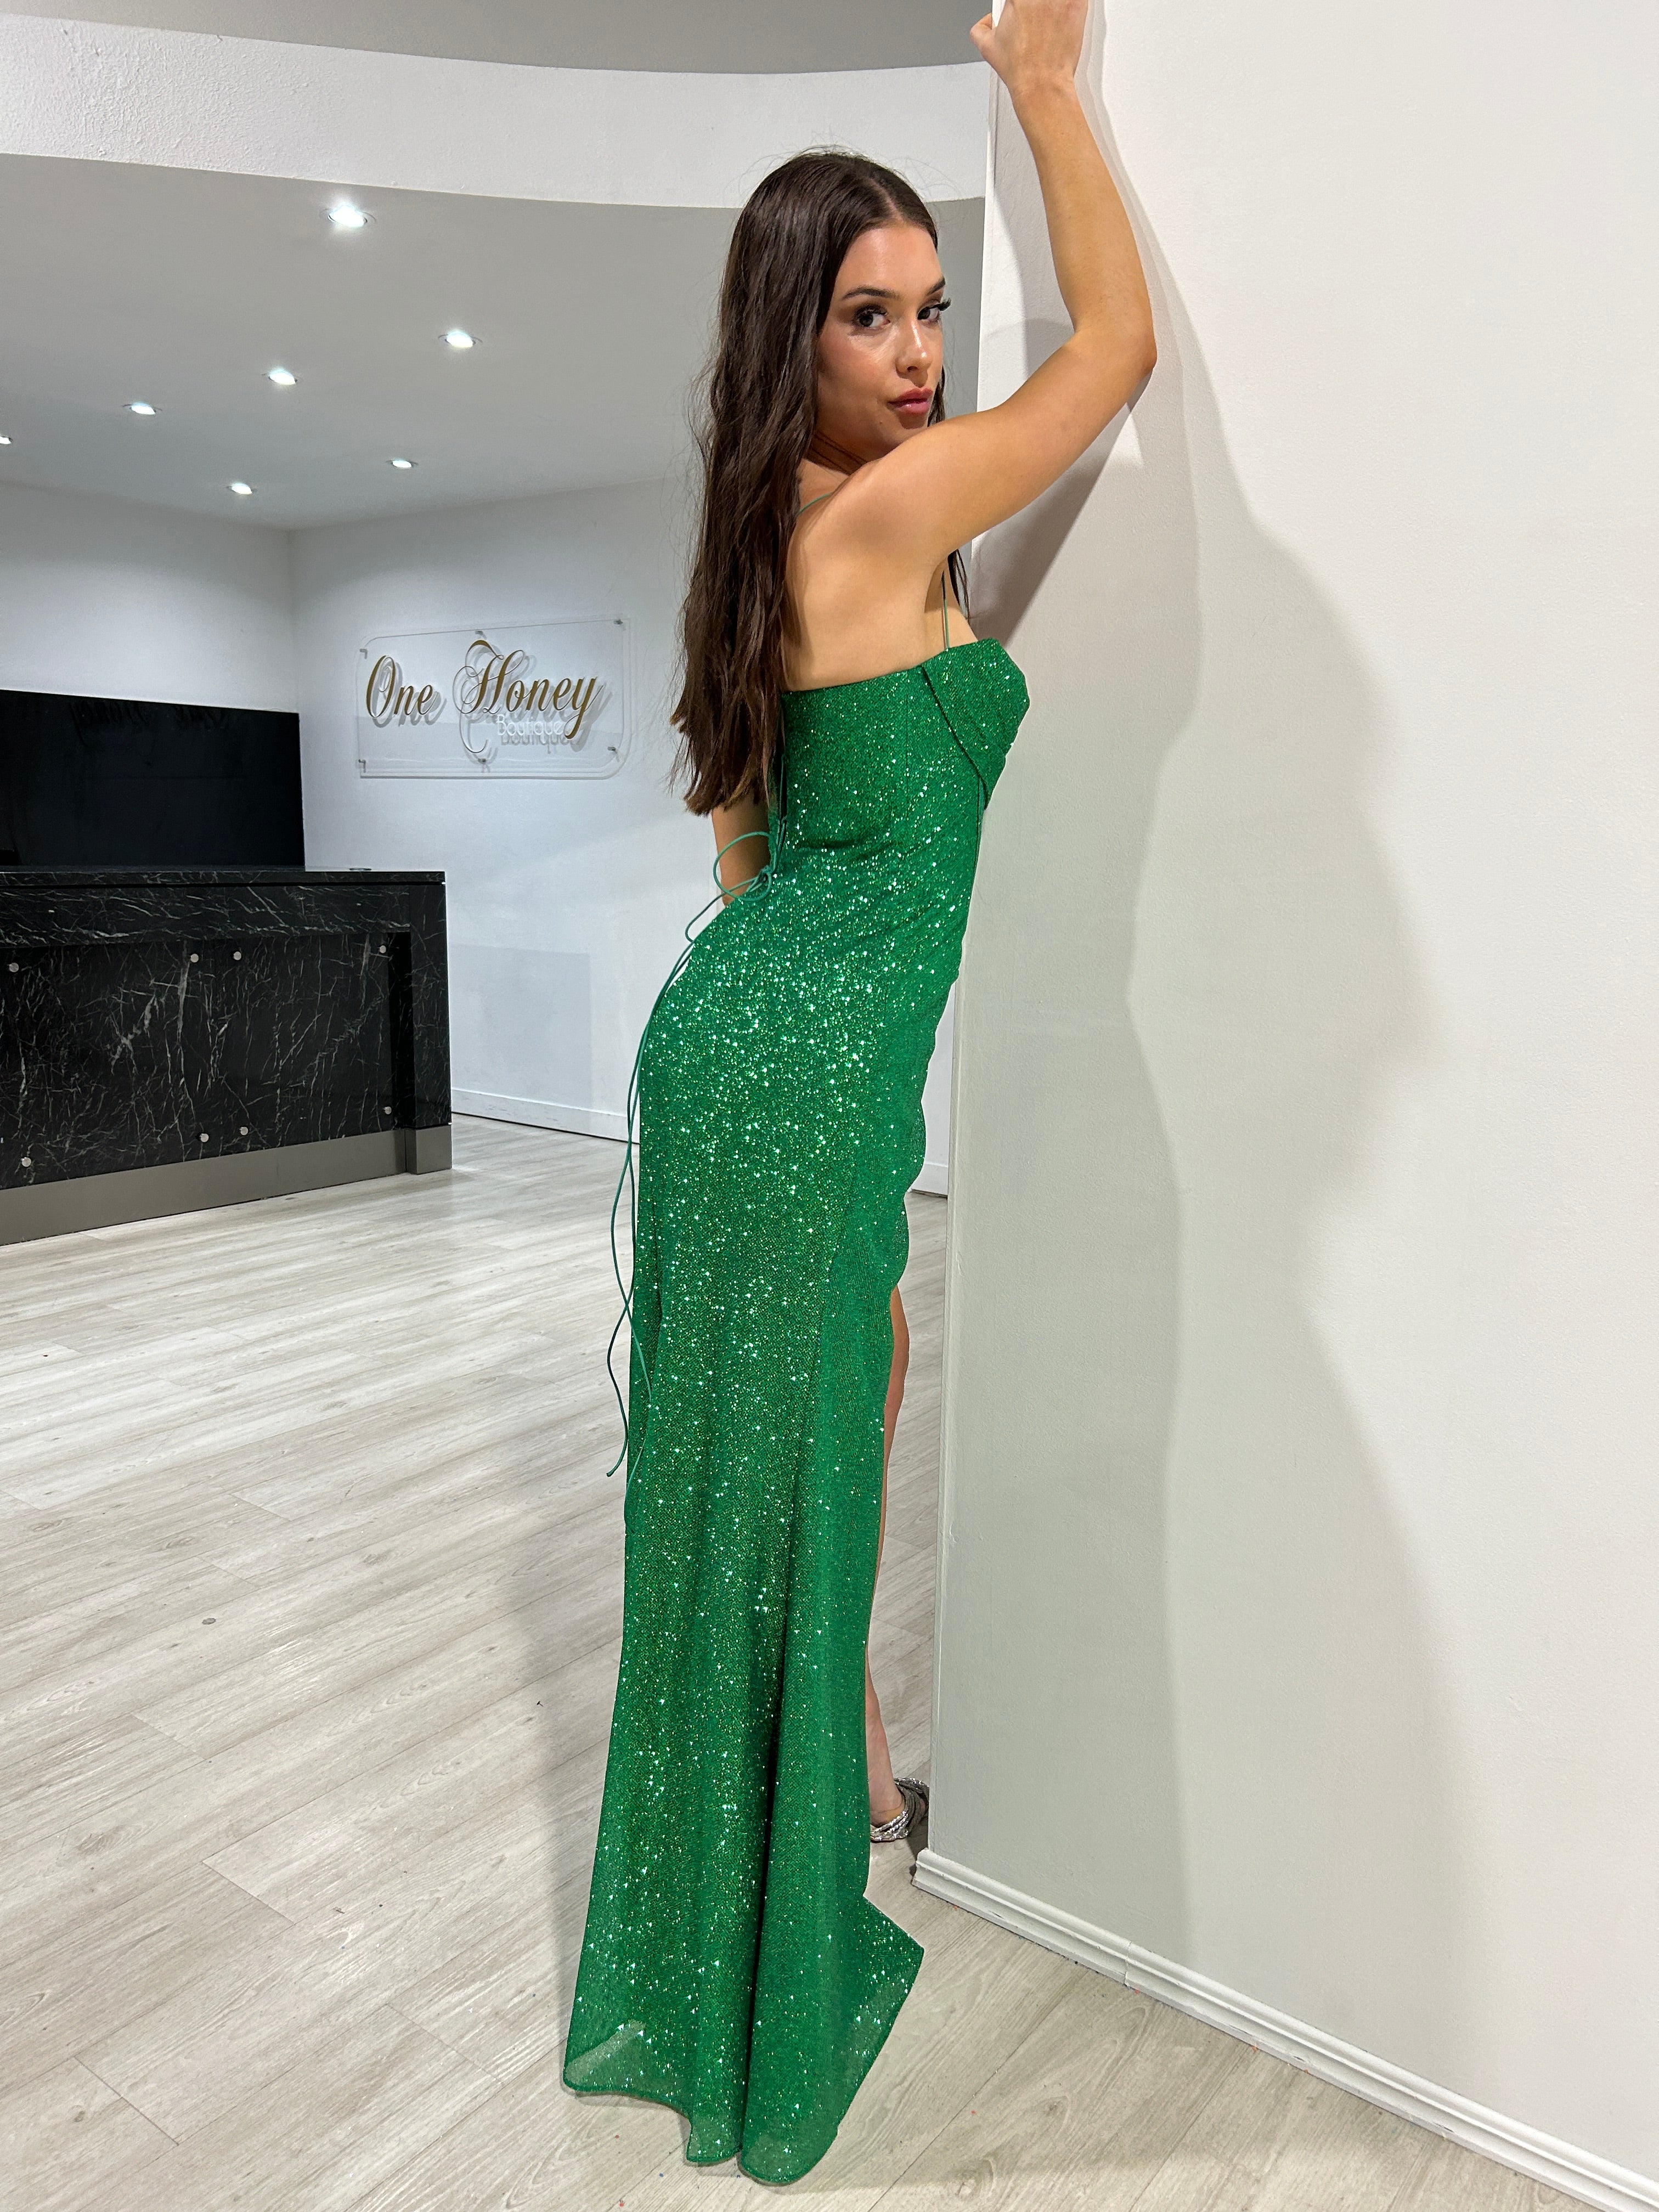 Honey Couture DAYA Emerald Glitter Corset Bustier Mermaid Formal Gown Dress